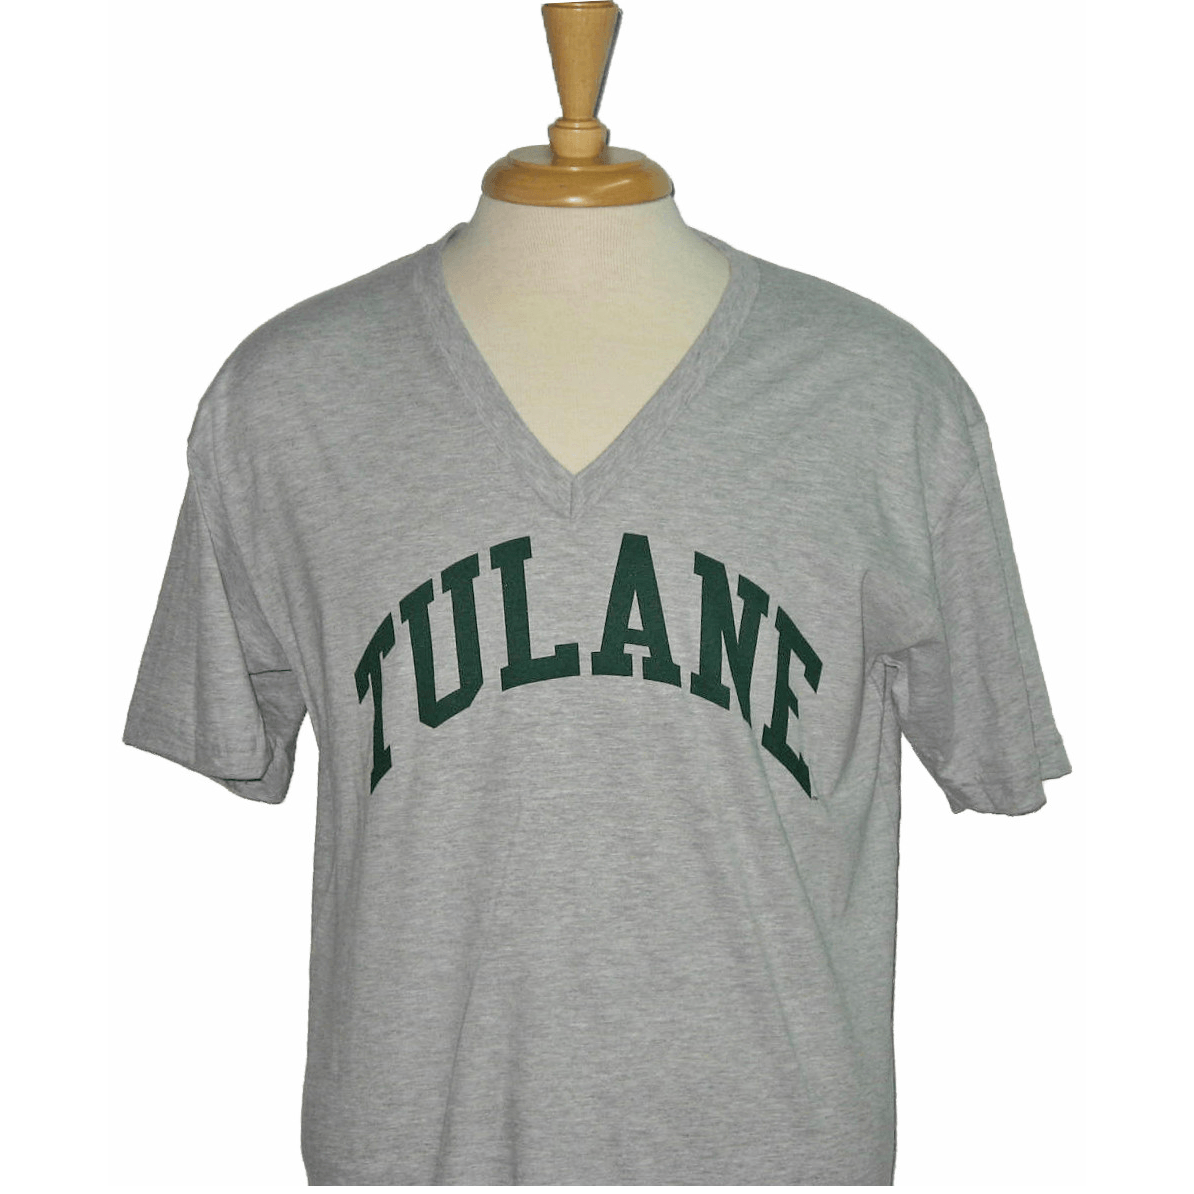 100 Most Popular Clothing Logo - Tulane American Apparel V-Neck - Gray | wardrobe | Pinterest ...